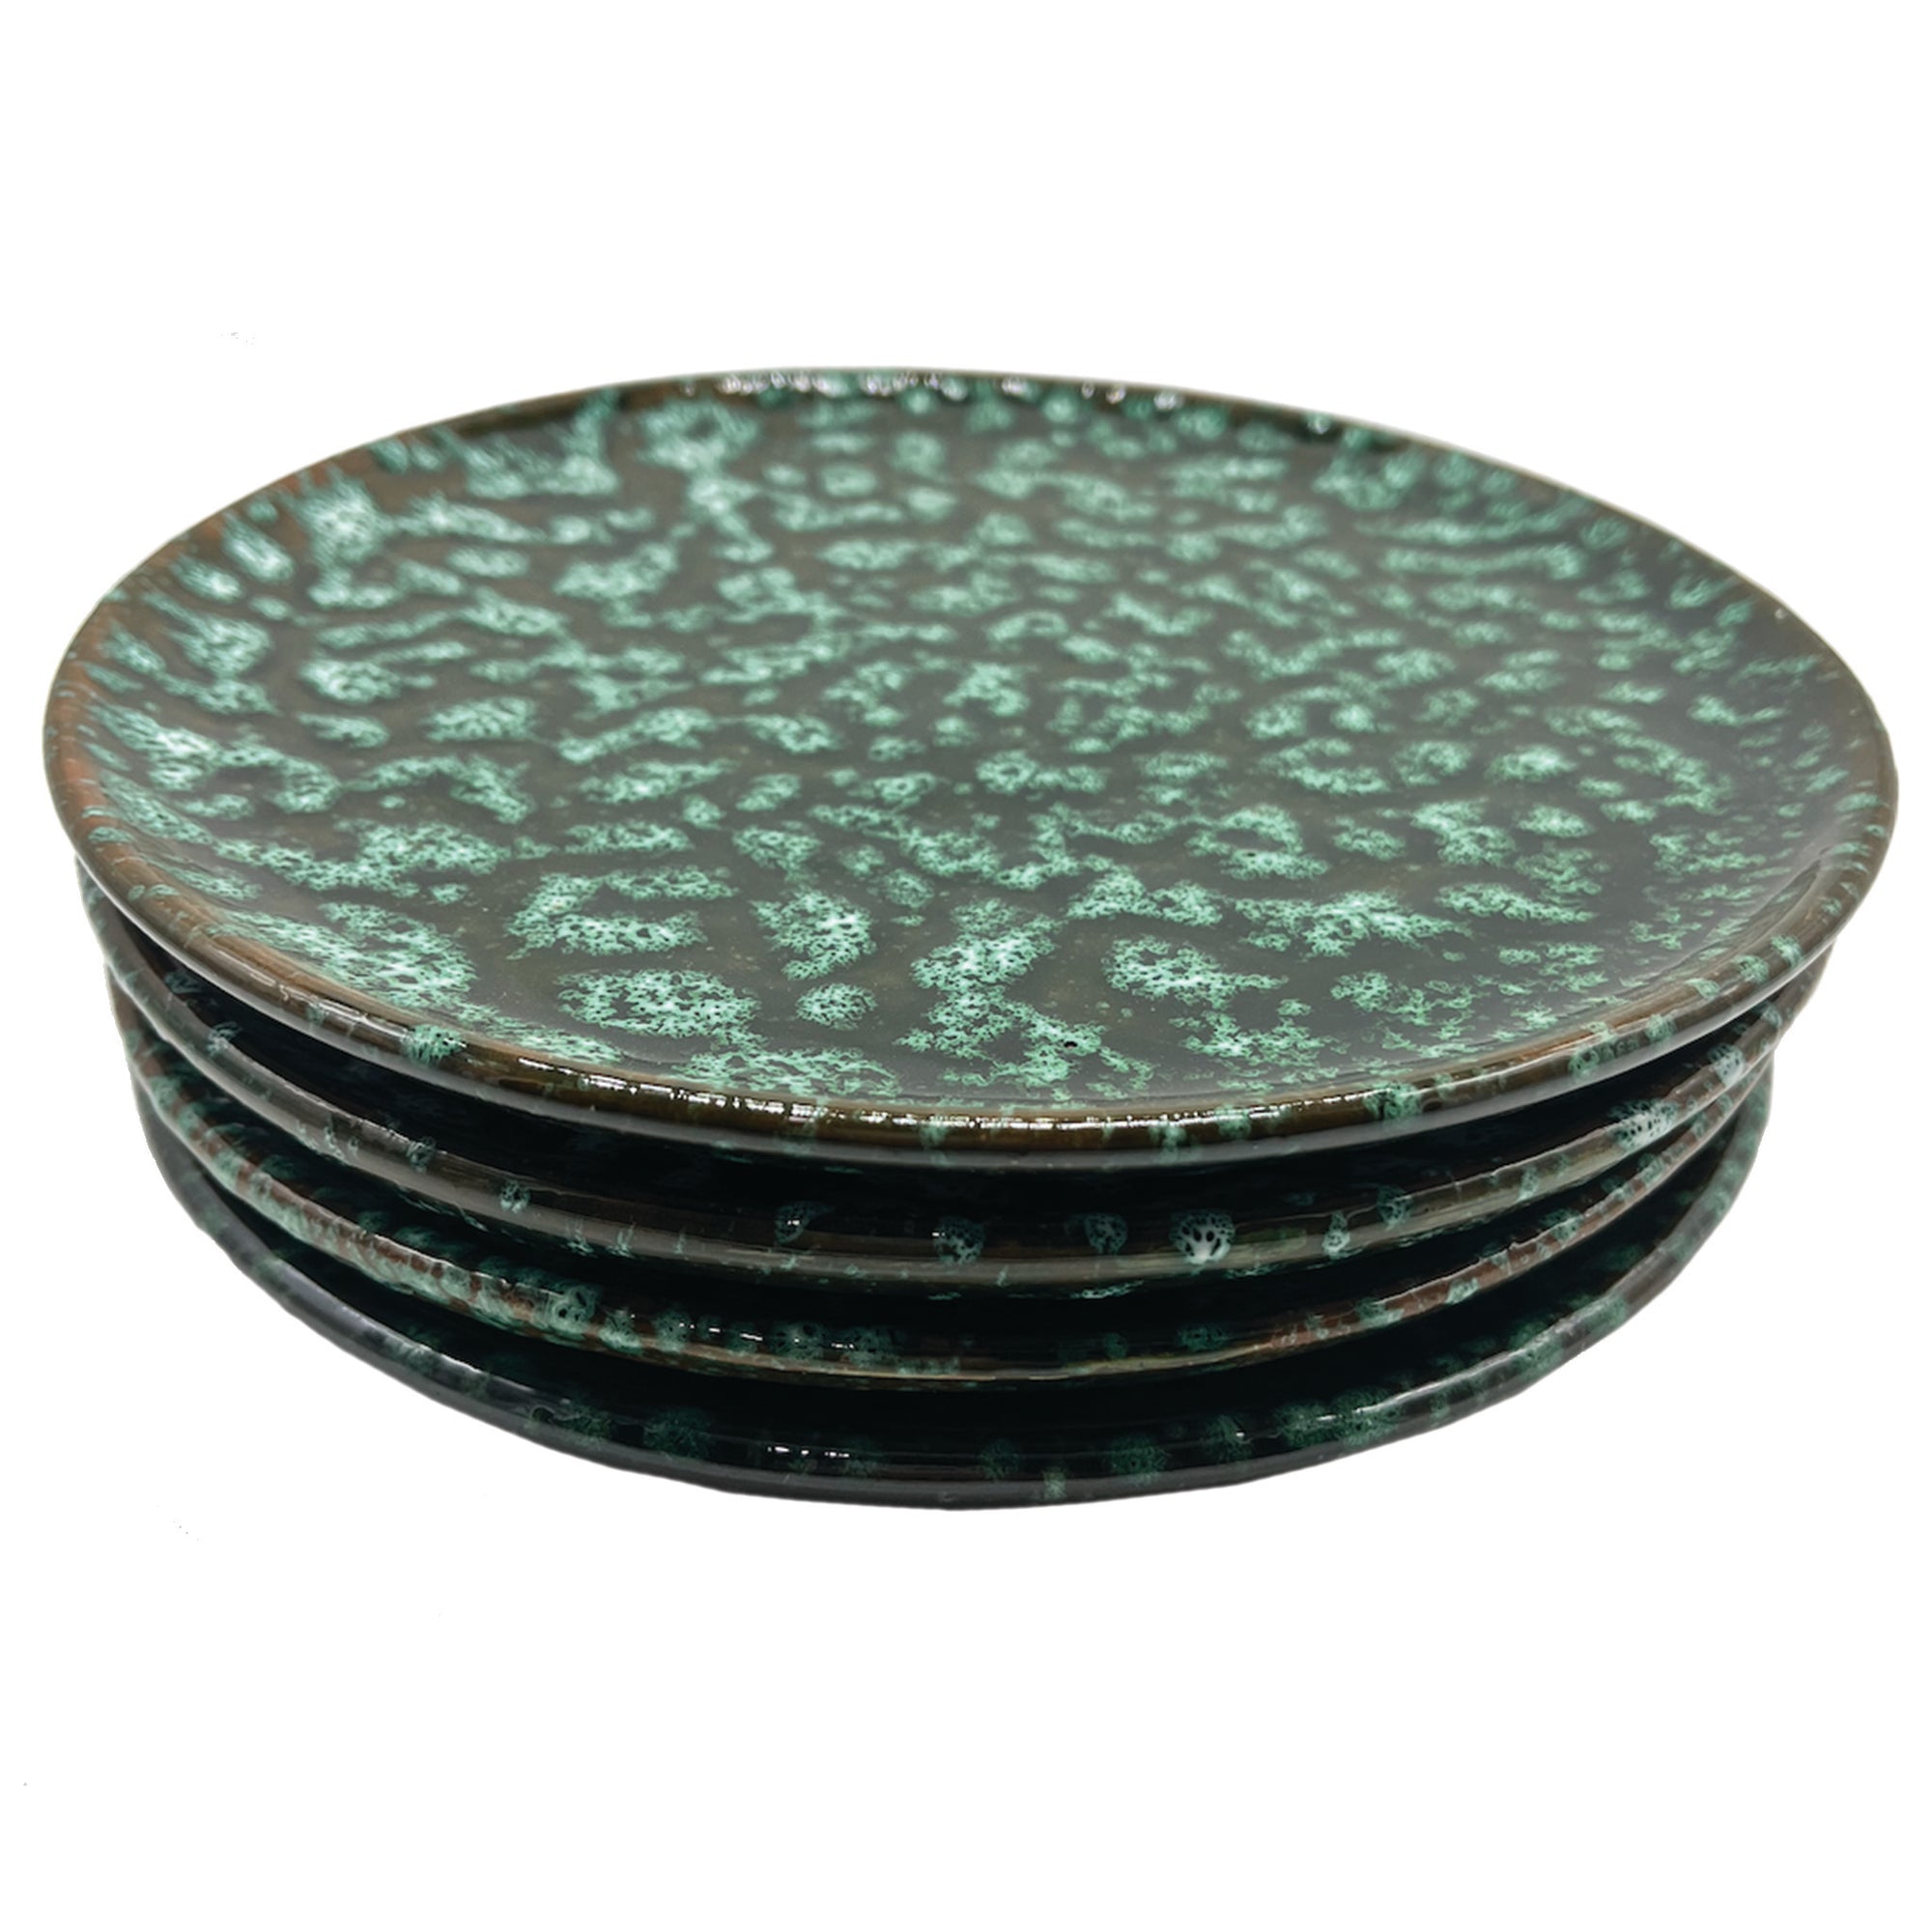 Speckled Ceramic Dinner Plates